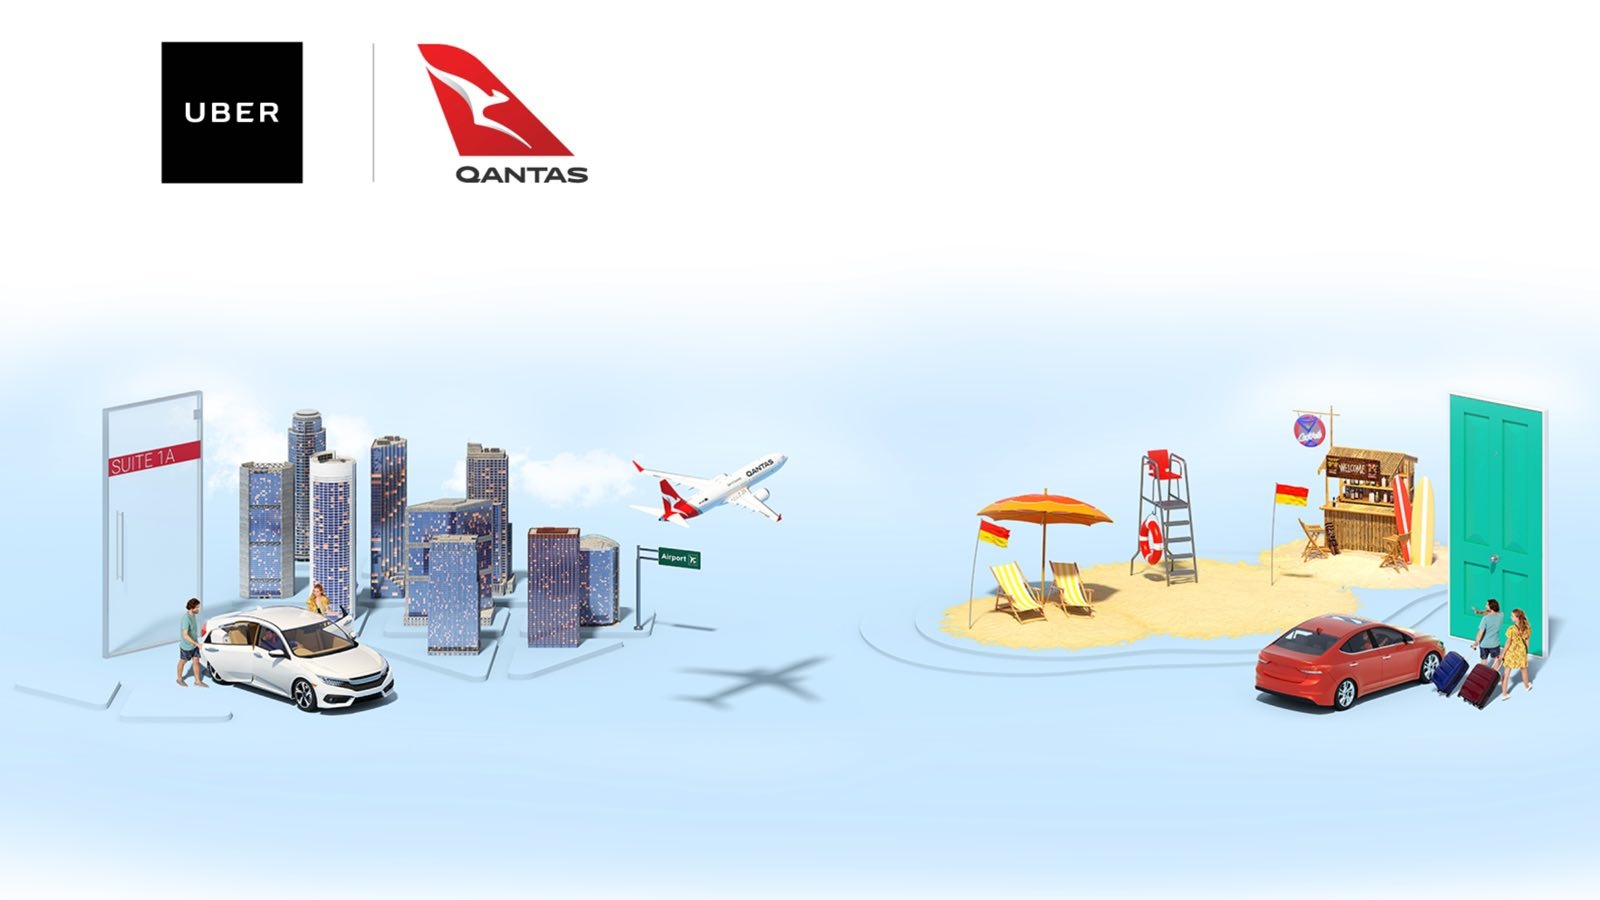 Qantas-Uber partnership